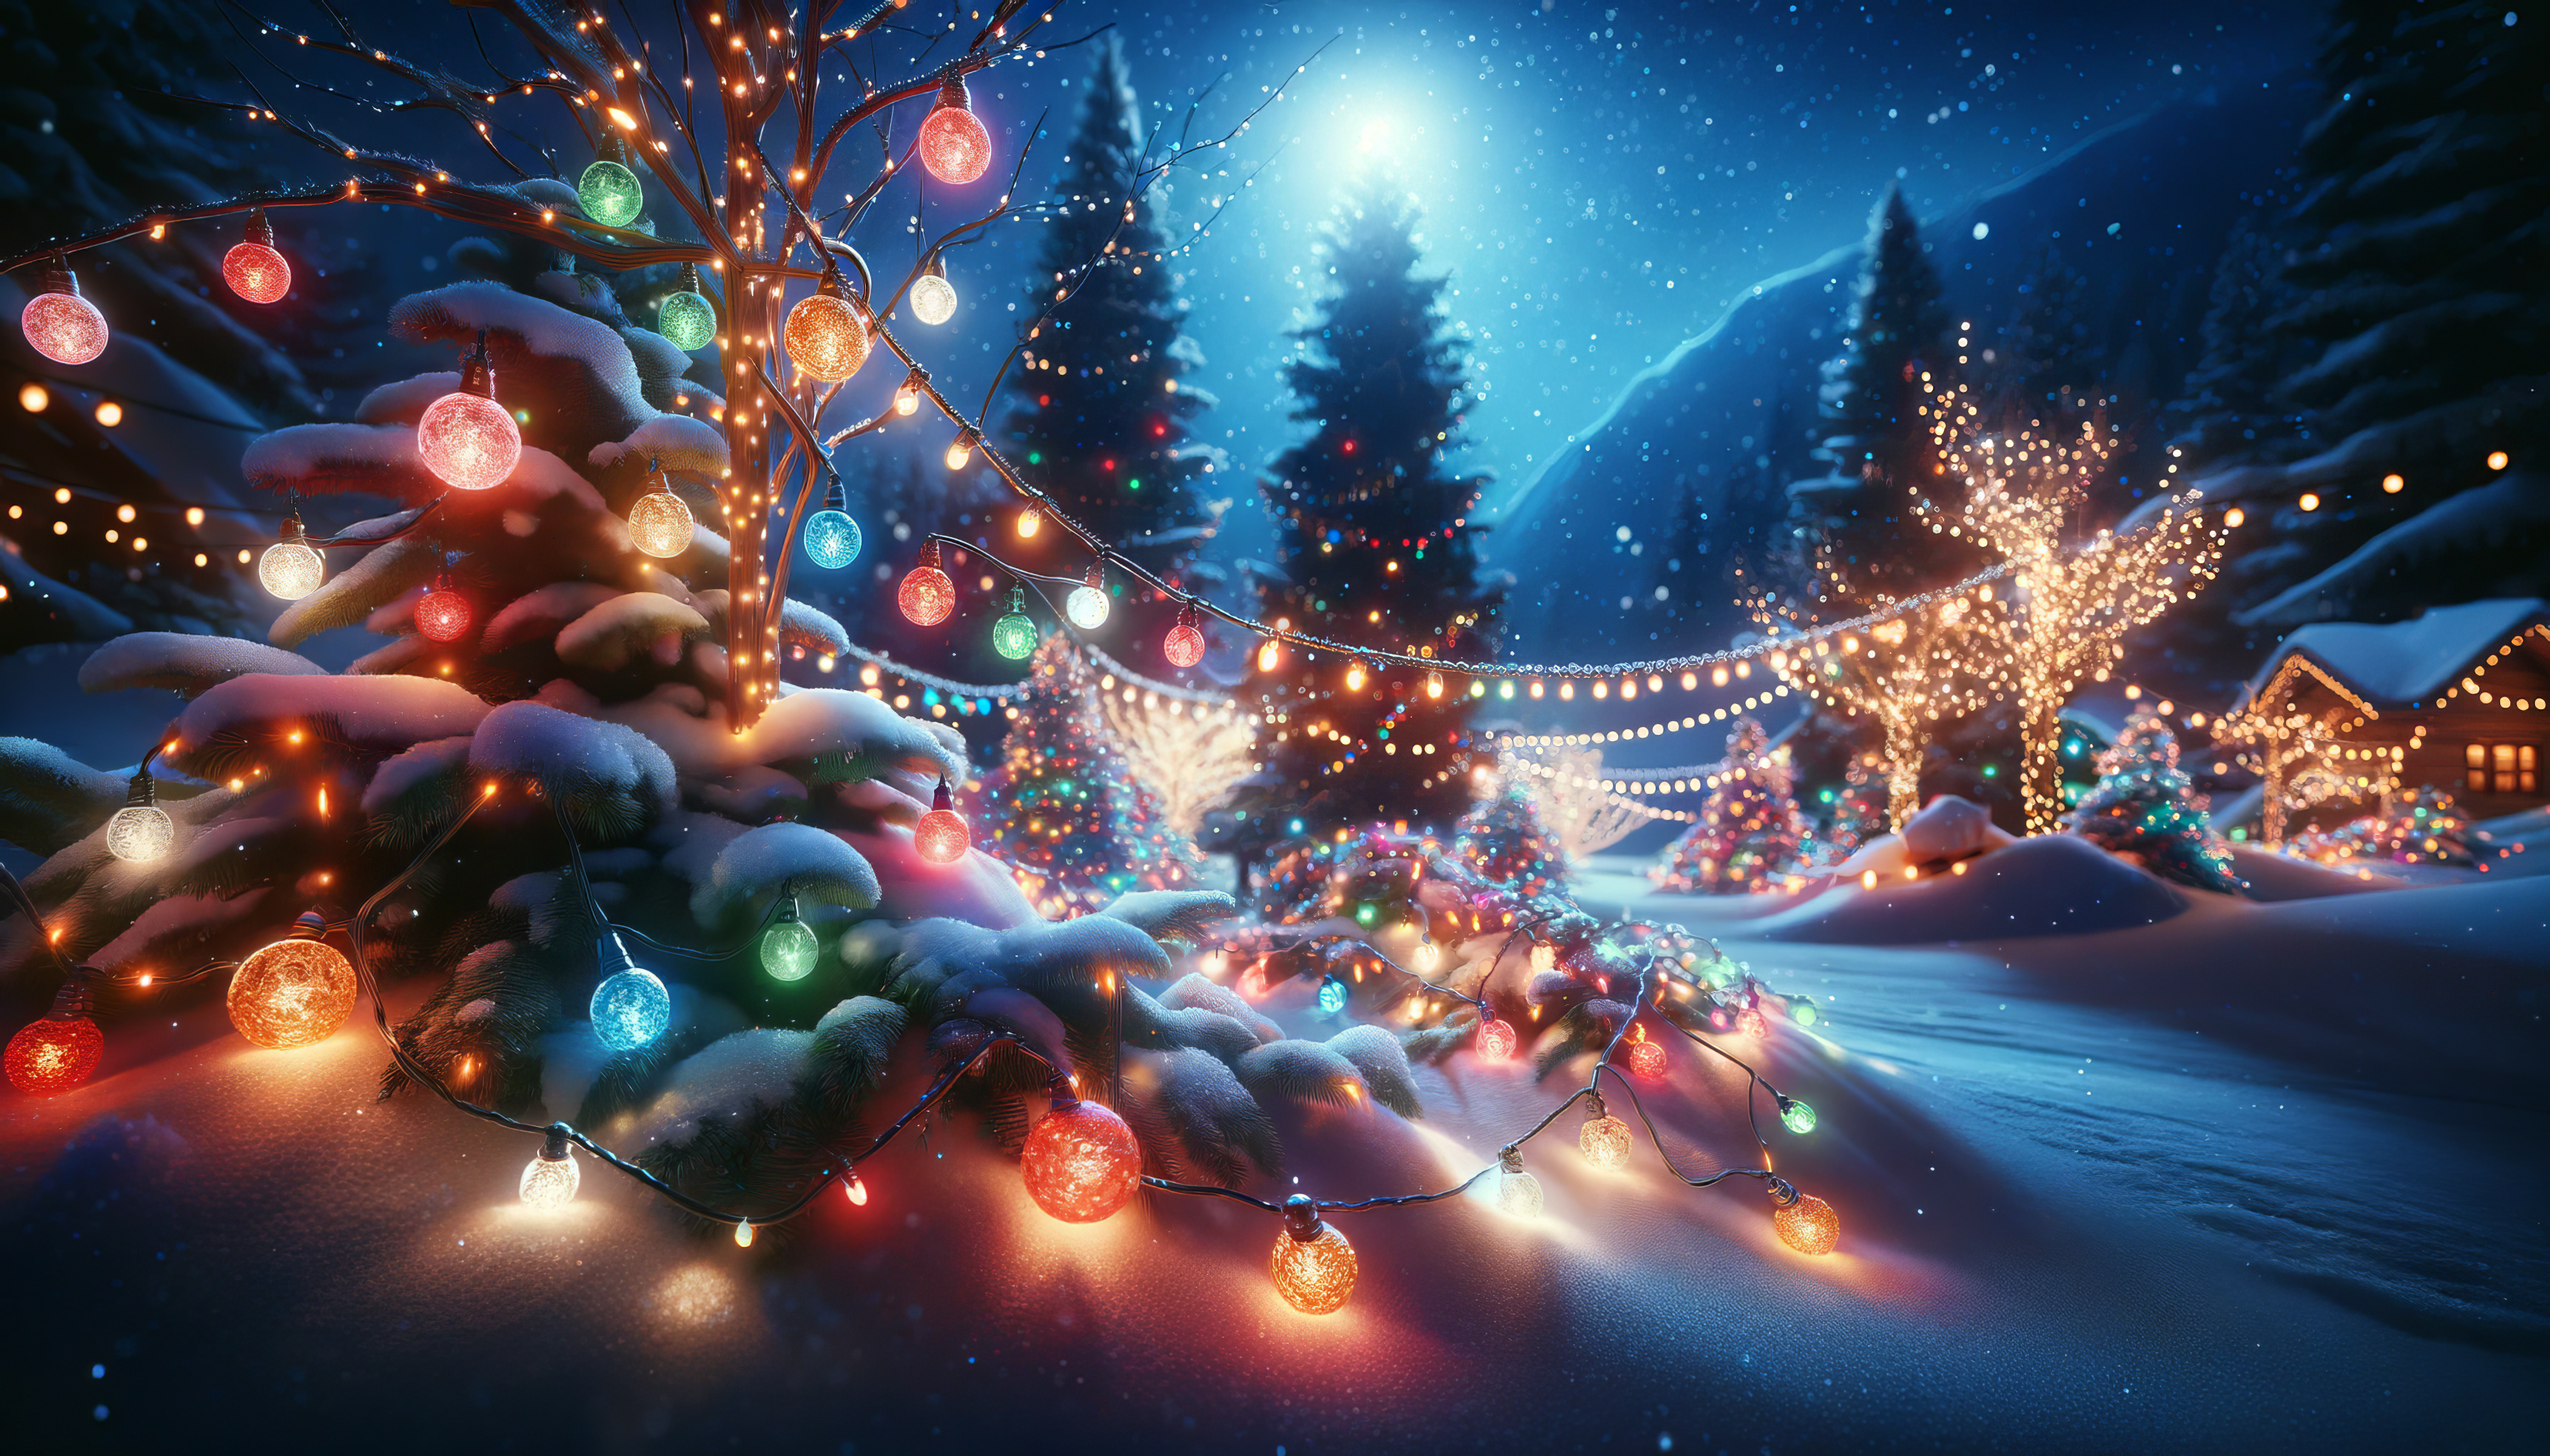 Enchanting Winter Holiday Lights HD Wallpaper By Robokoboto